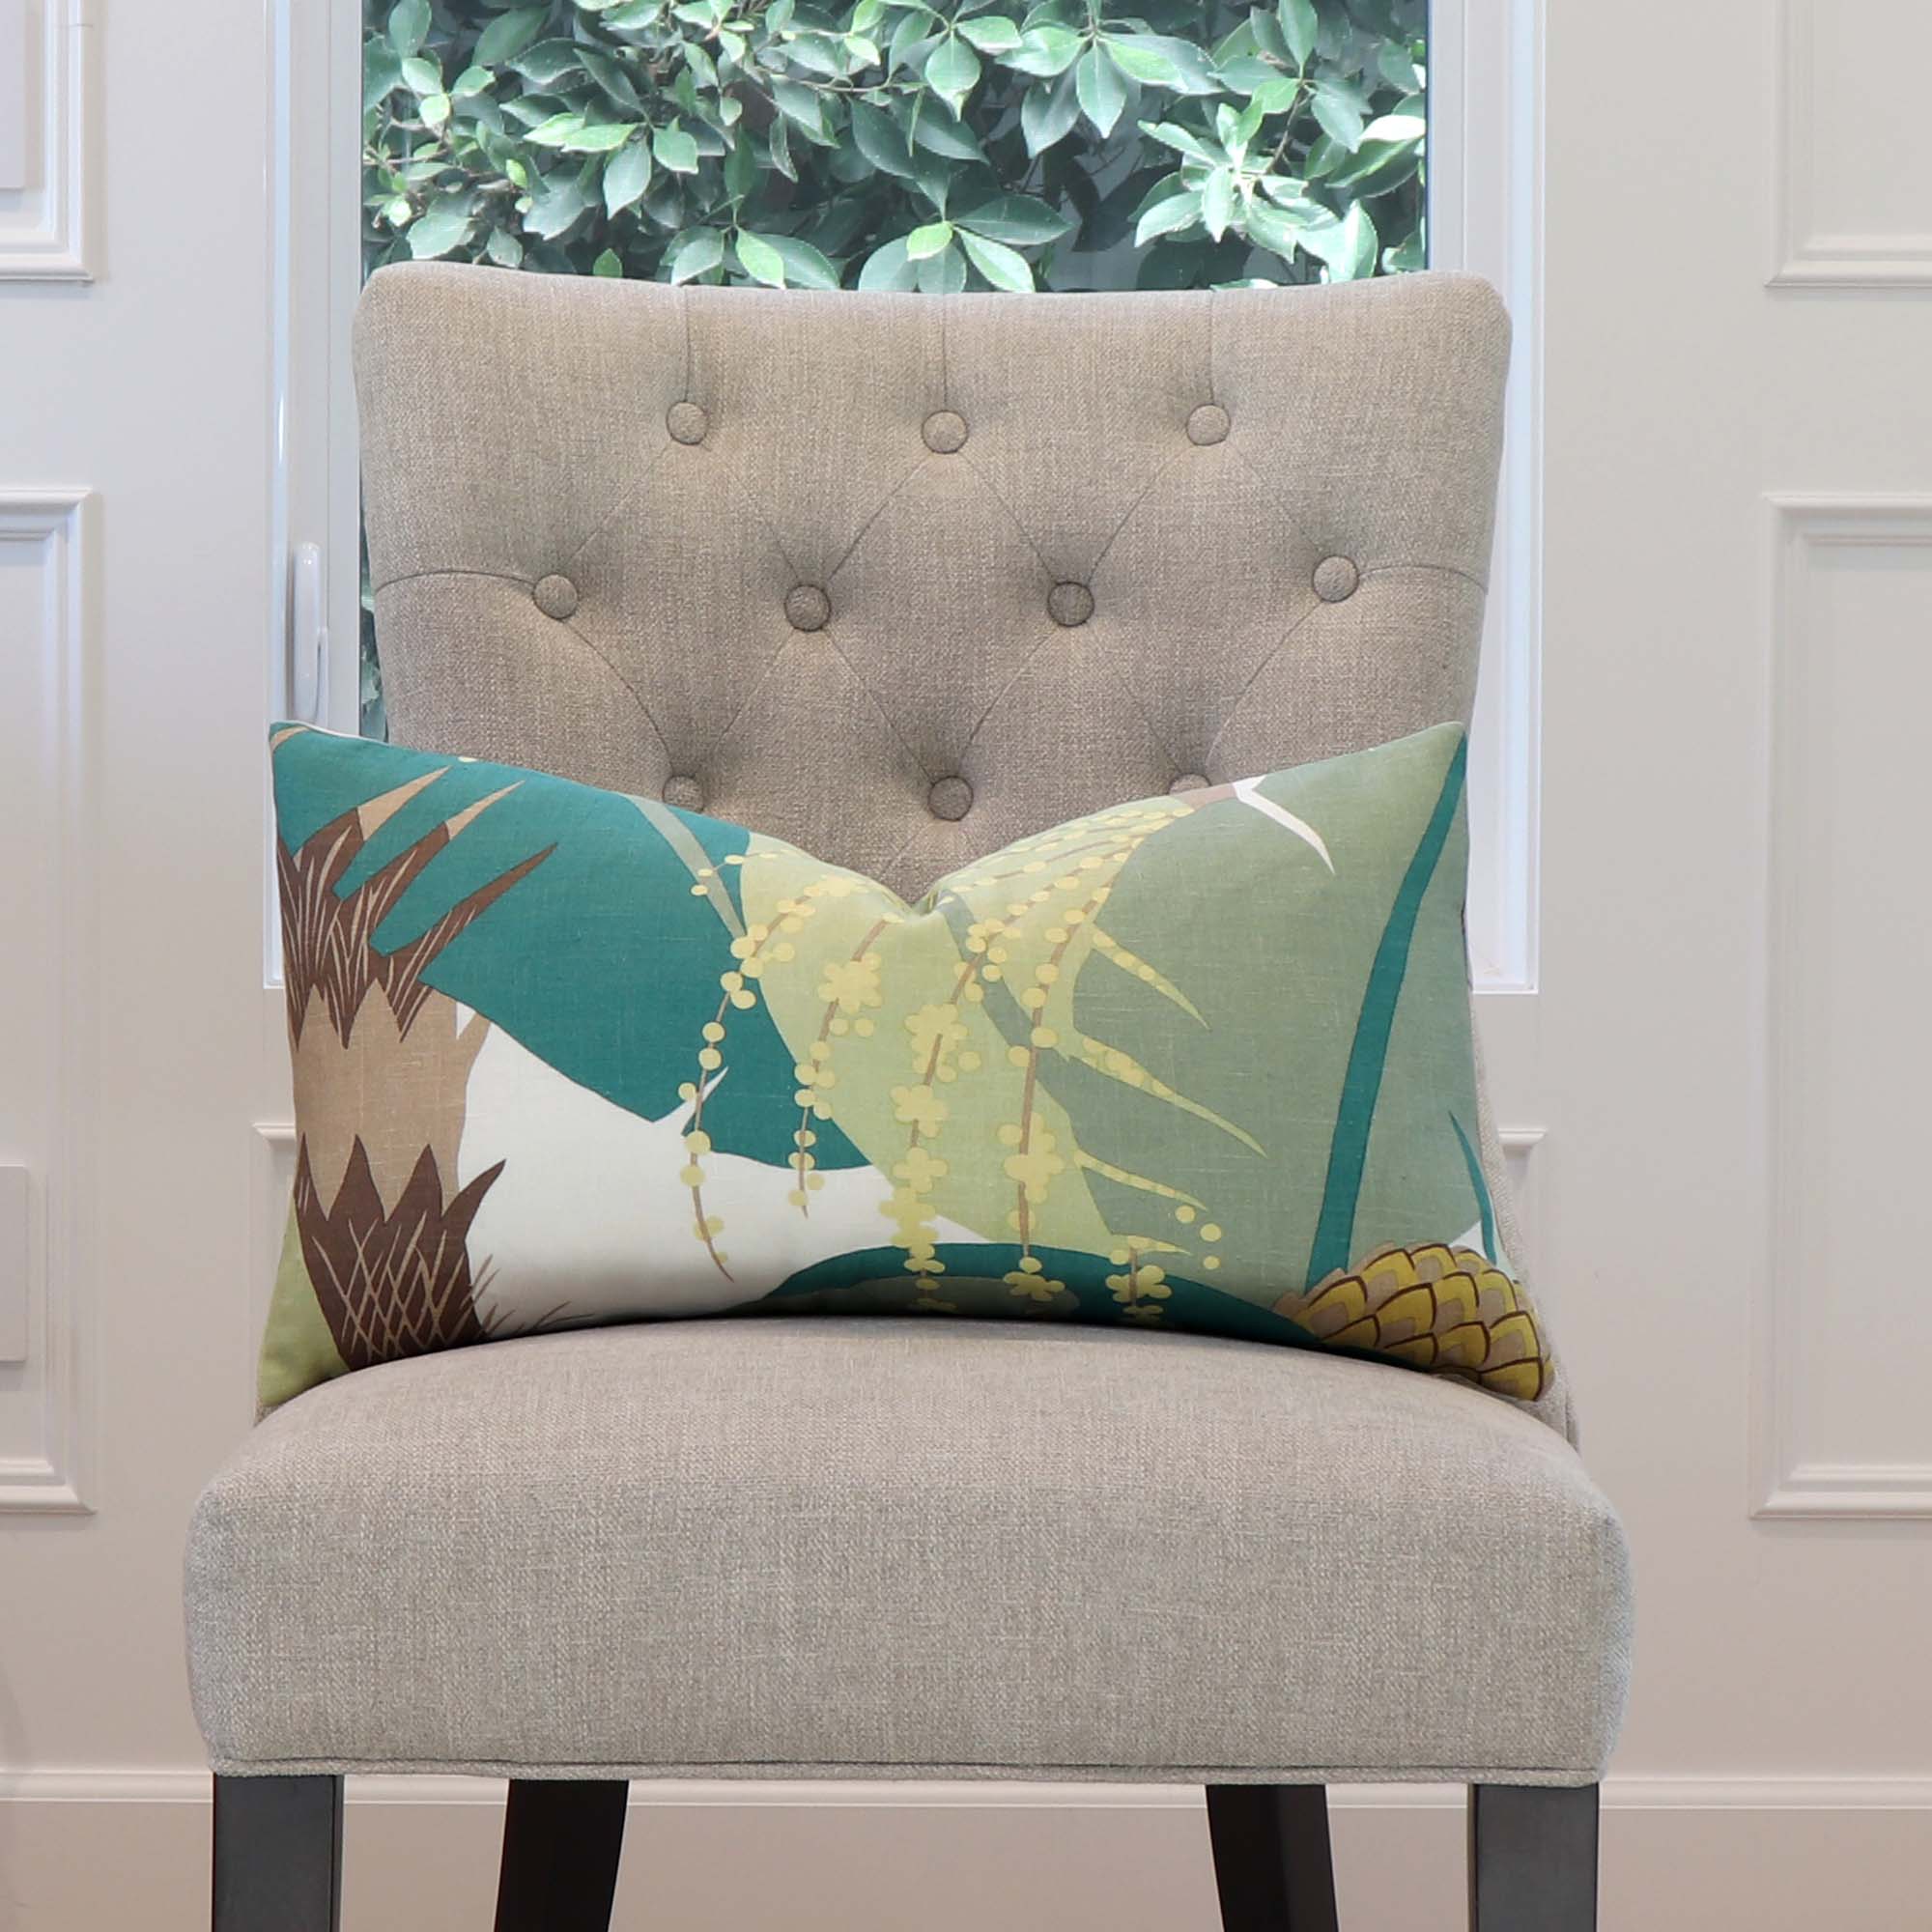 Schumacher Ananas Palm Pineapple Designer Luxury Decorative Lumbar Throw Pillow Cover on Armless Chair